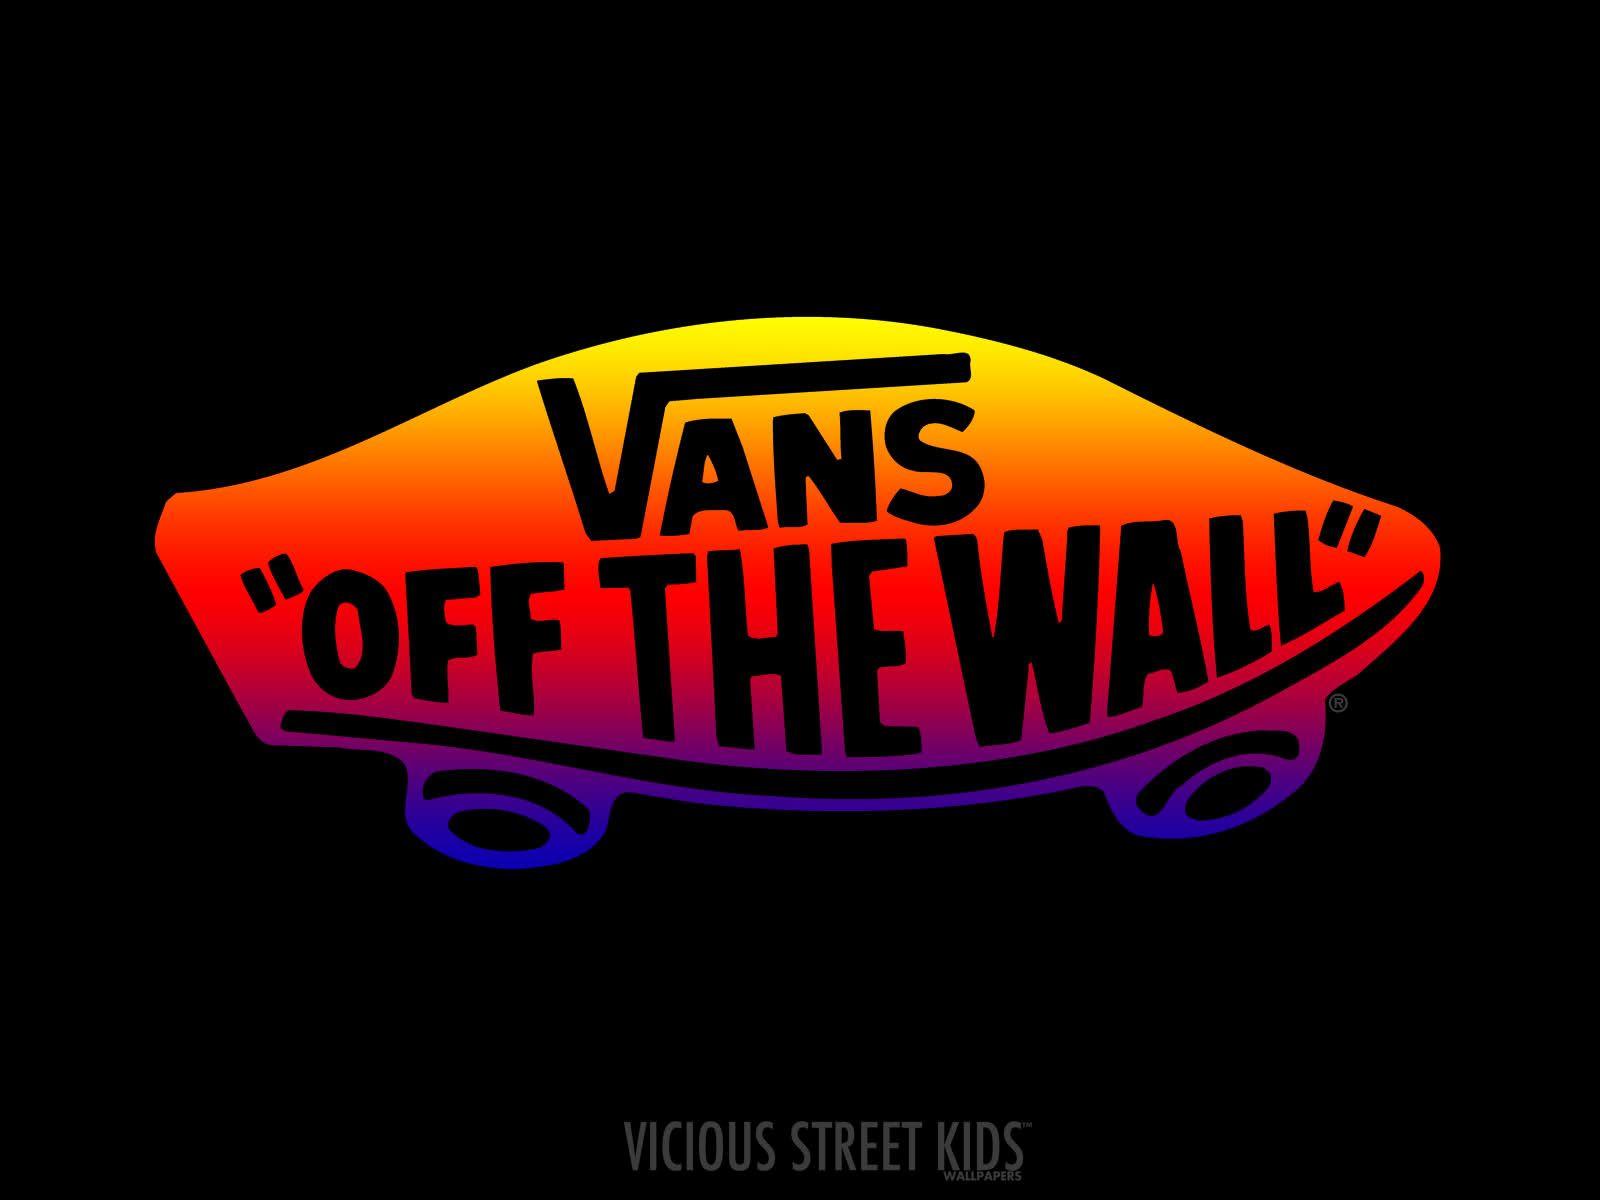 Vans Off The Wall Logos Wallpaper HD. I HD Image